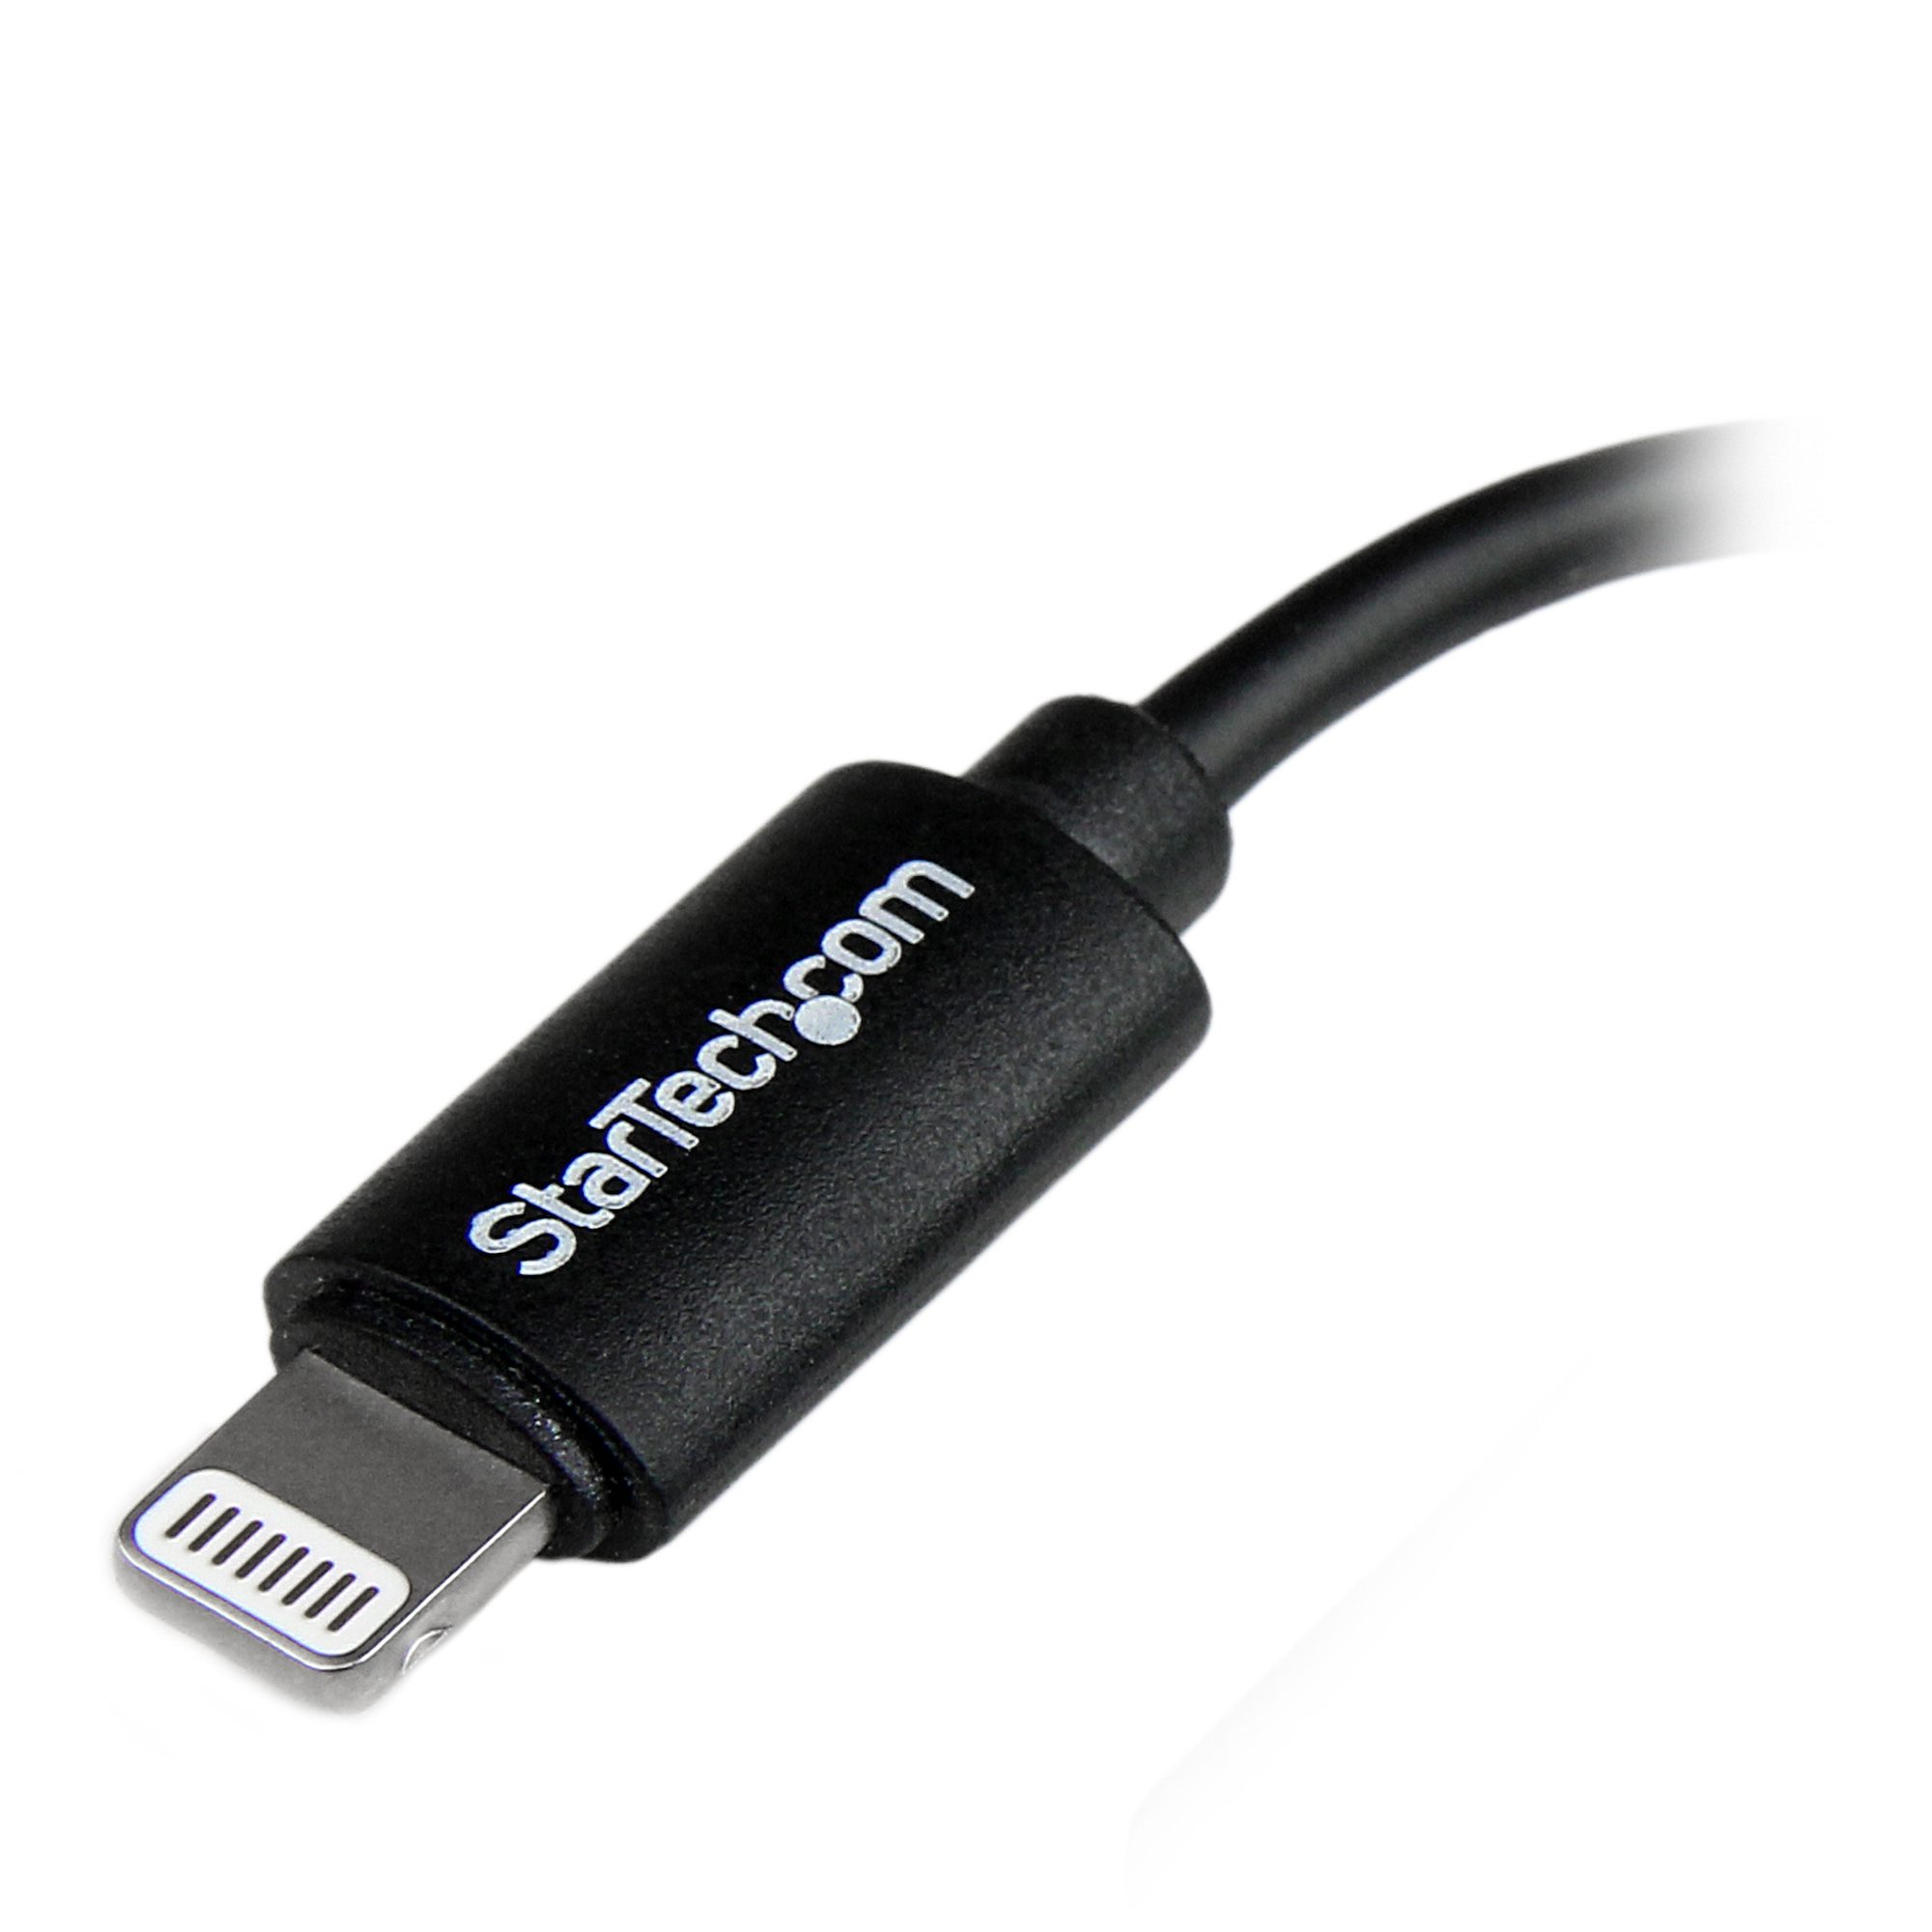 Adaptateur Micro USB/ 30Pin Apple vers Lightning 8Pin pour iPhone